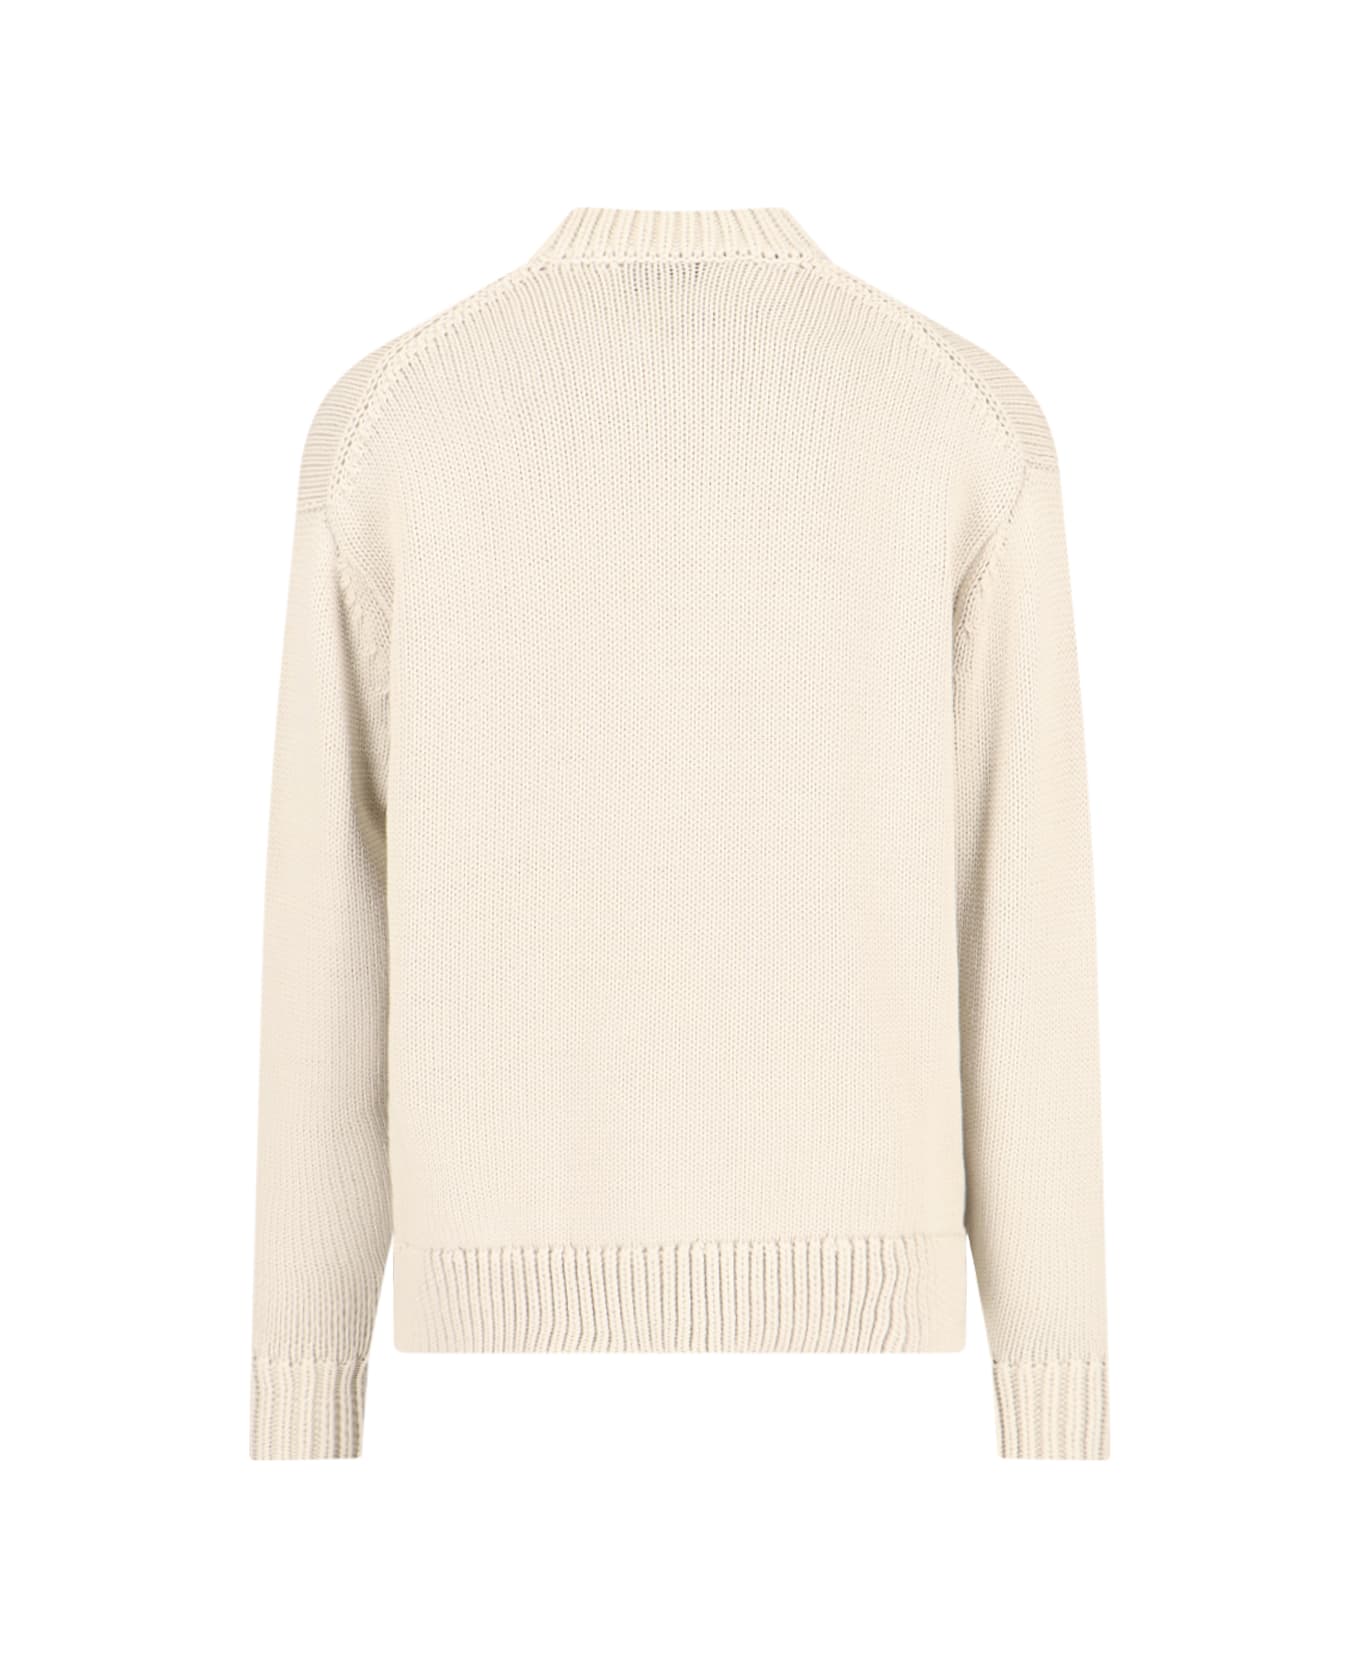 Studio Nicholson Sweater - Cream